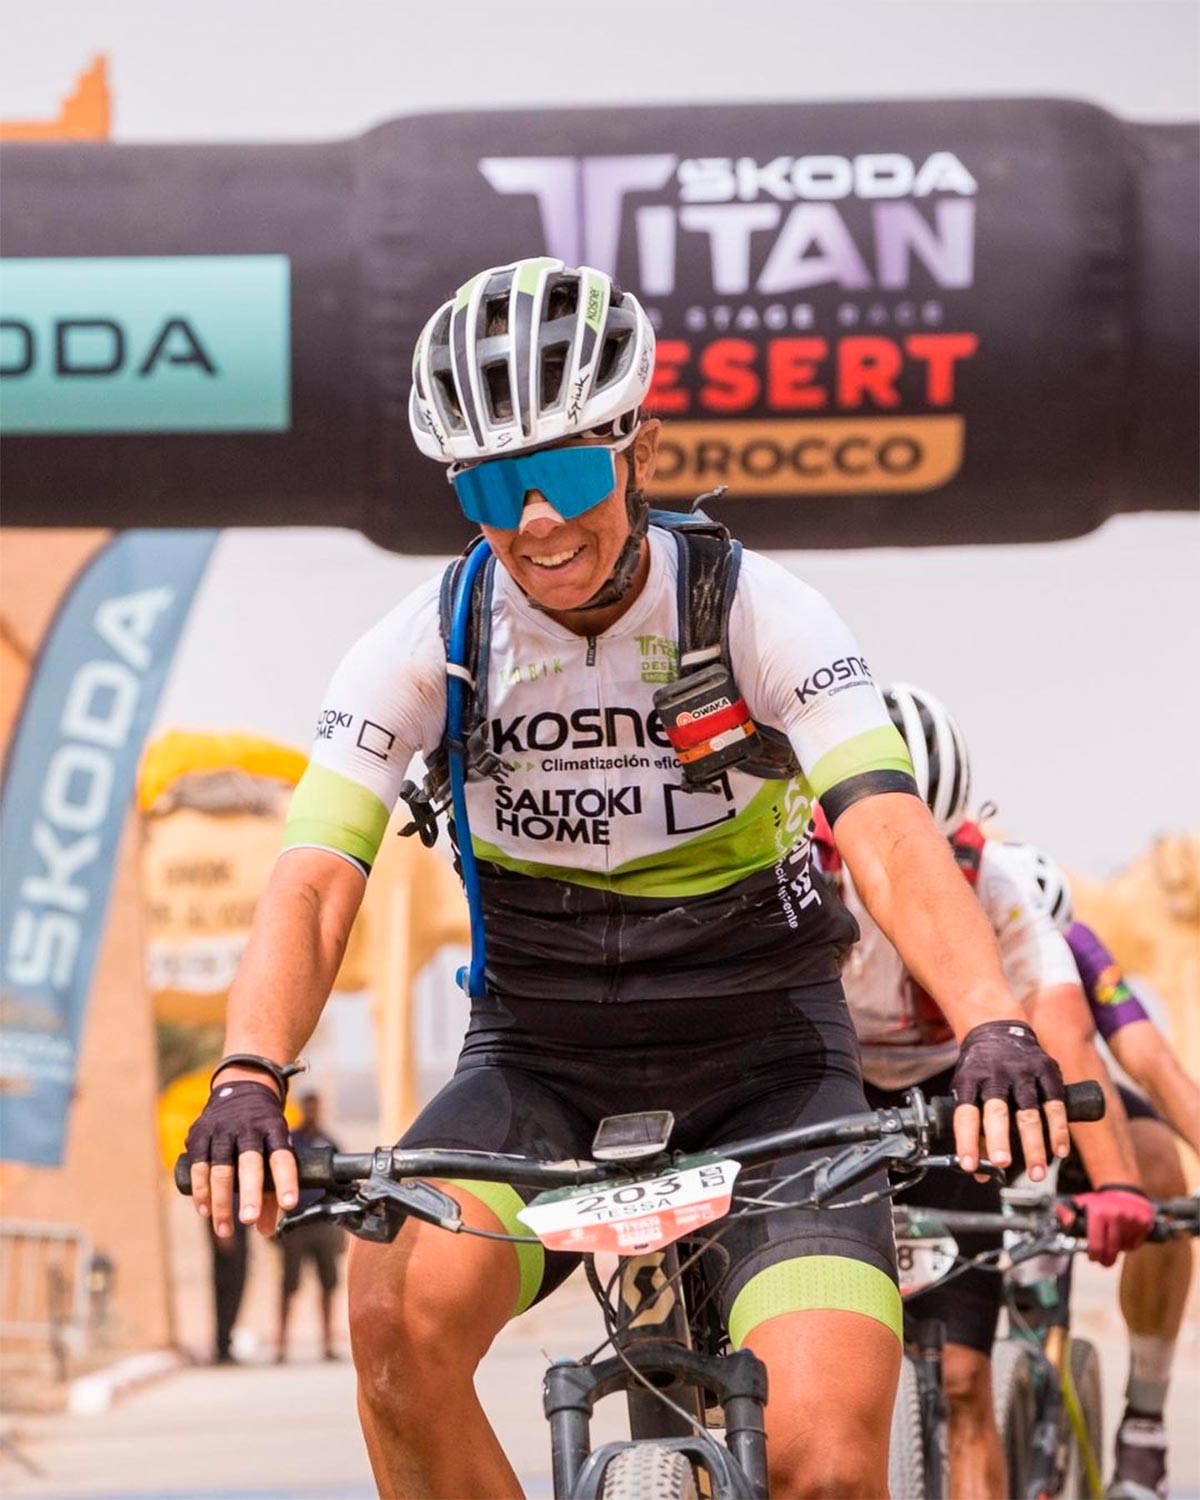 Titan Desert Morocco 2023: Roberto Bou y Tessa Kortekaas ganan la quinta etapa y pasan a liderar la general